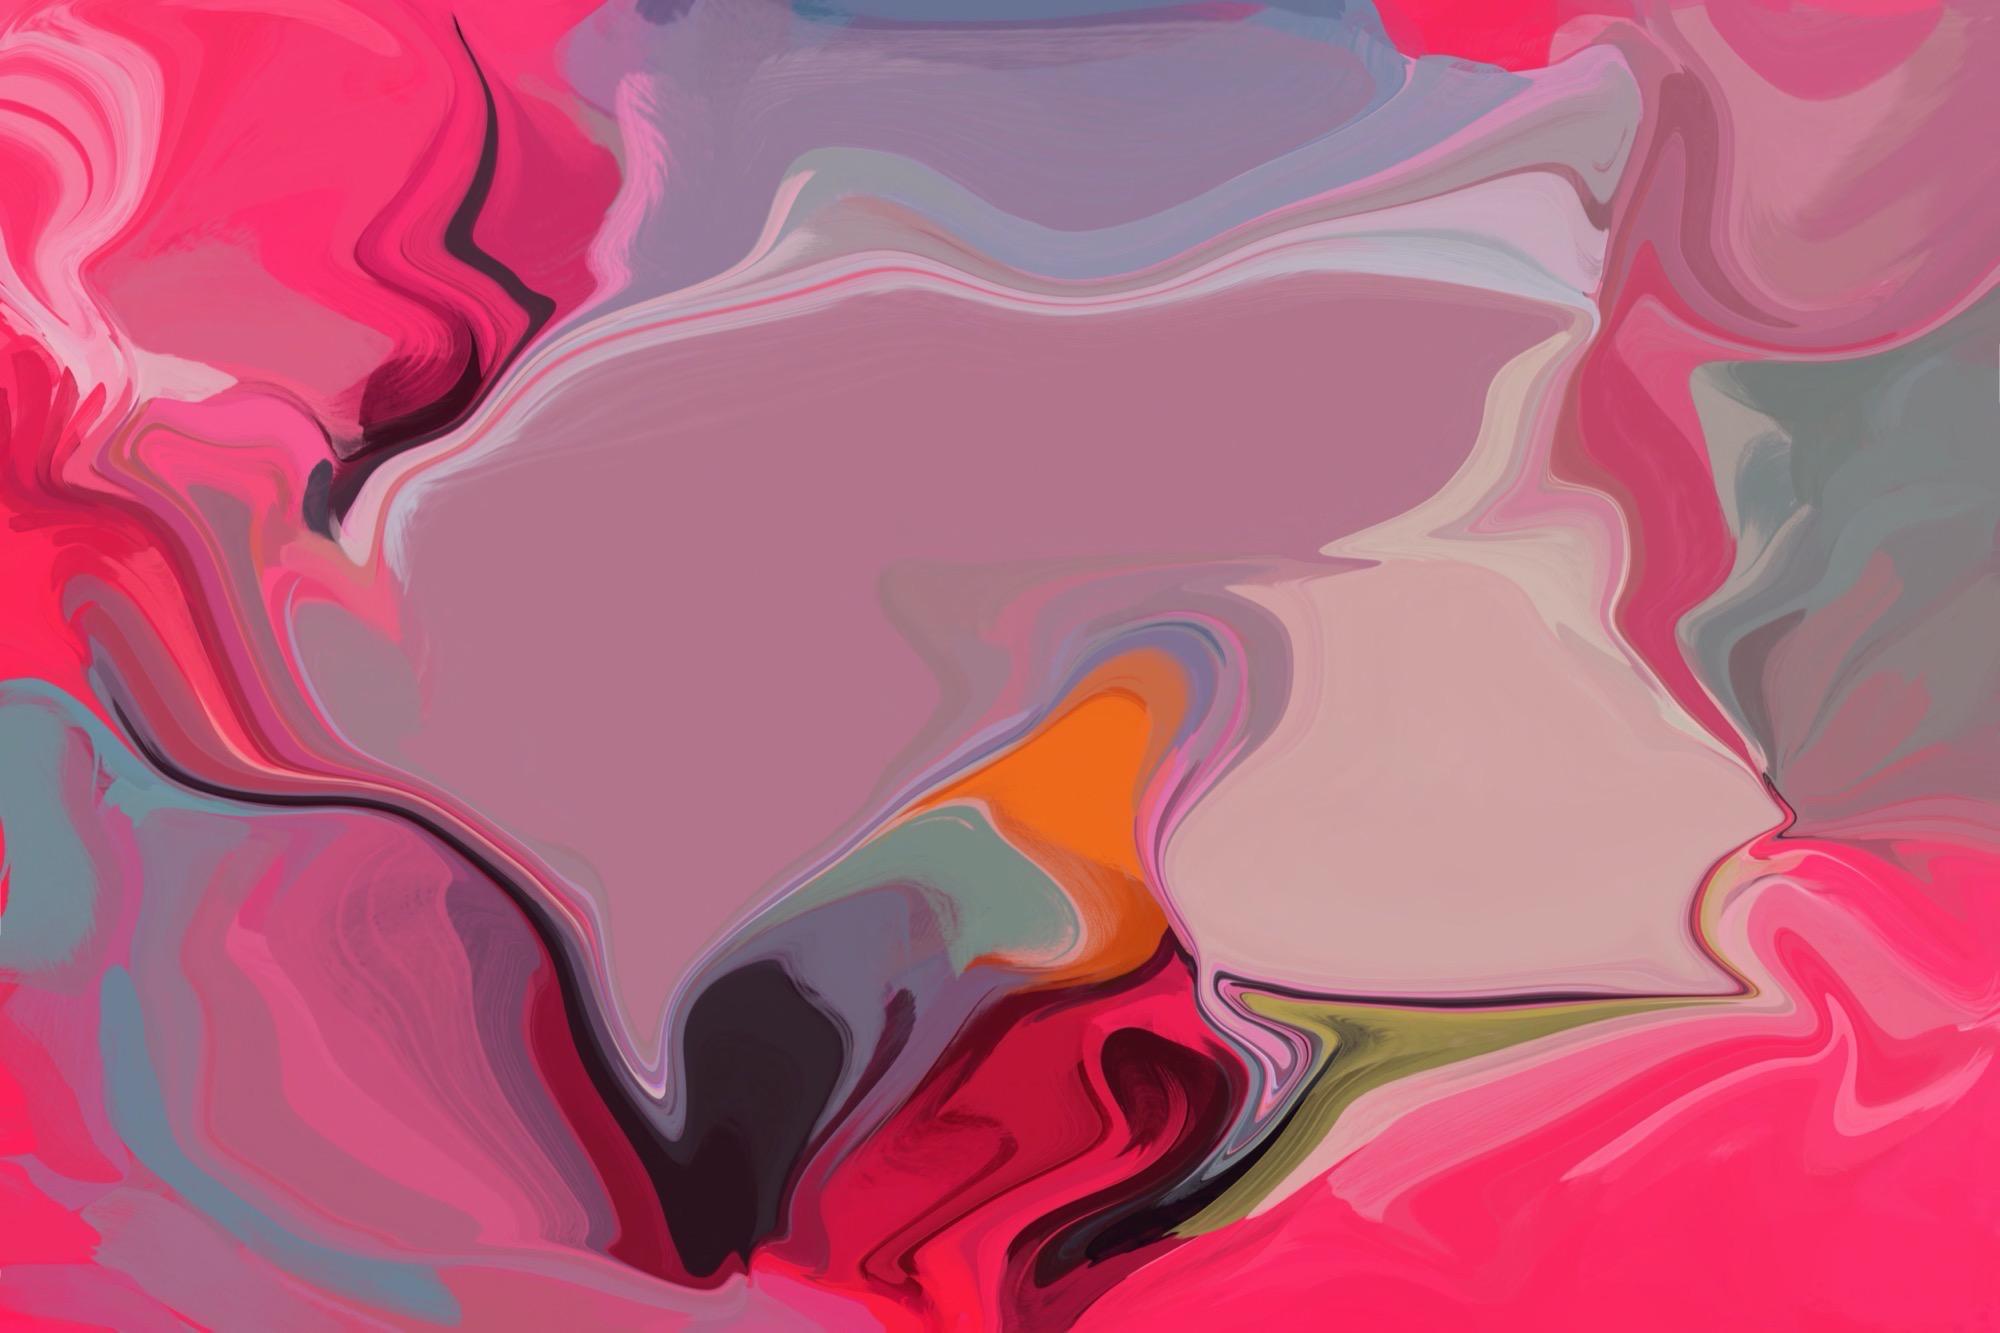 Rosa Gemälde Mixed Media Leinwand 45x60 Zoll" Die kreative Struktur